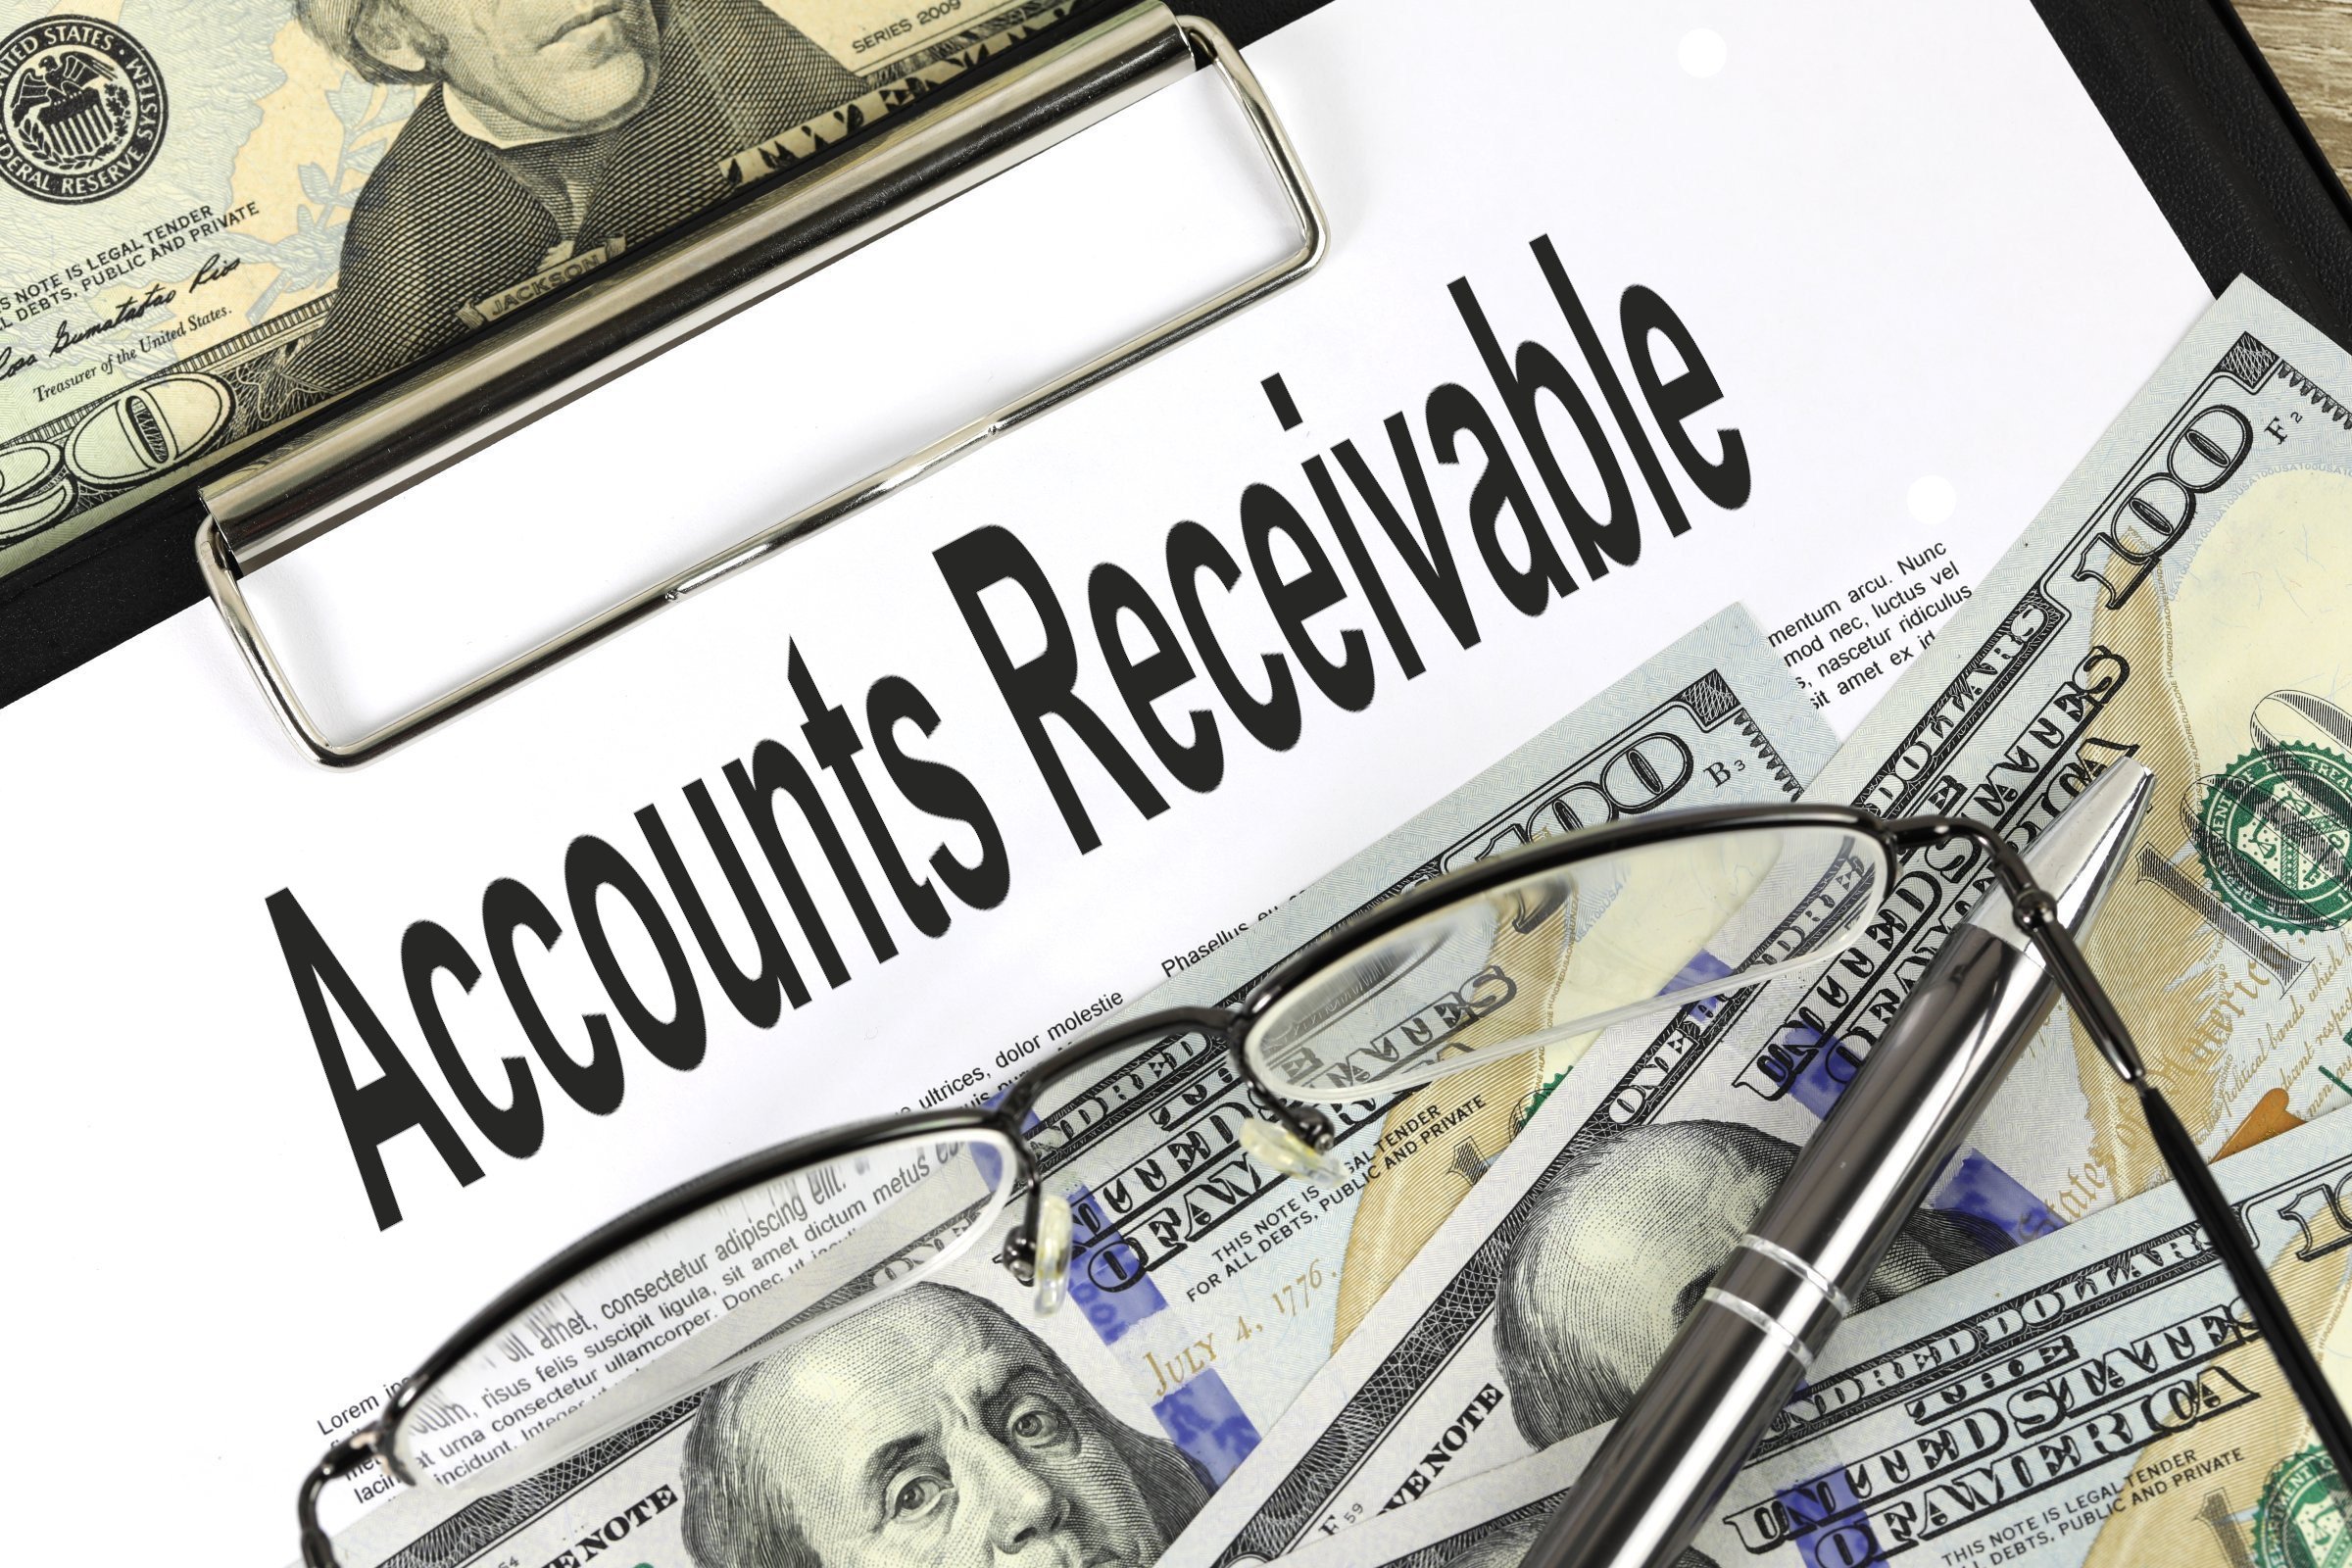 accounts receivable